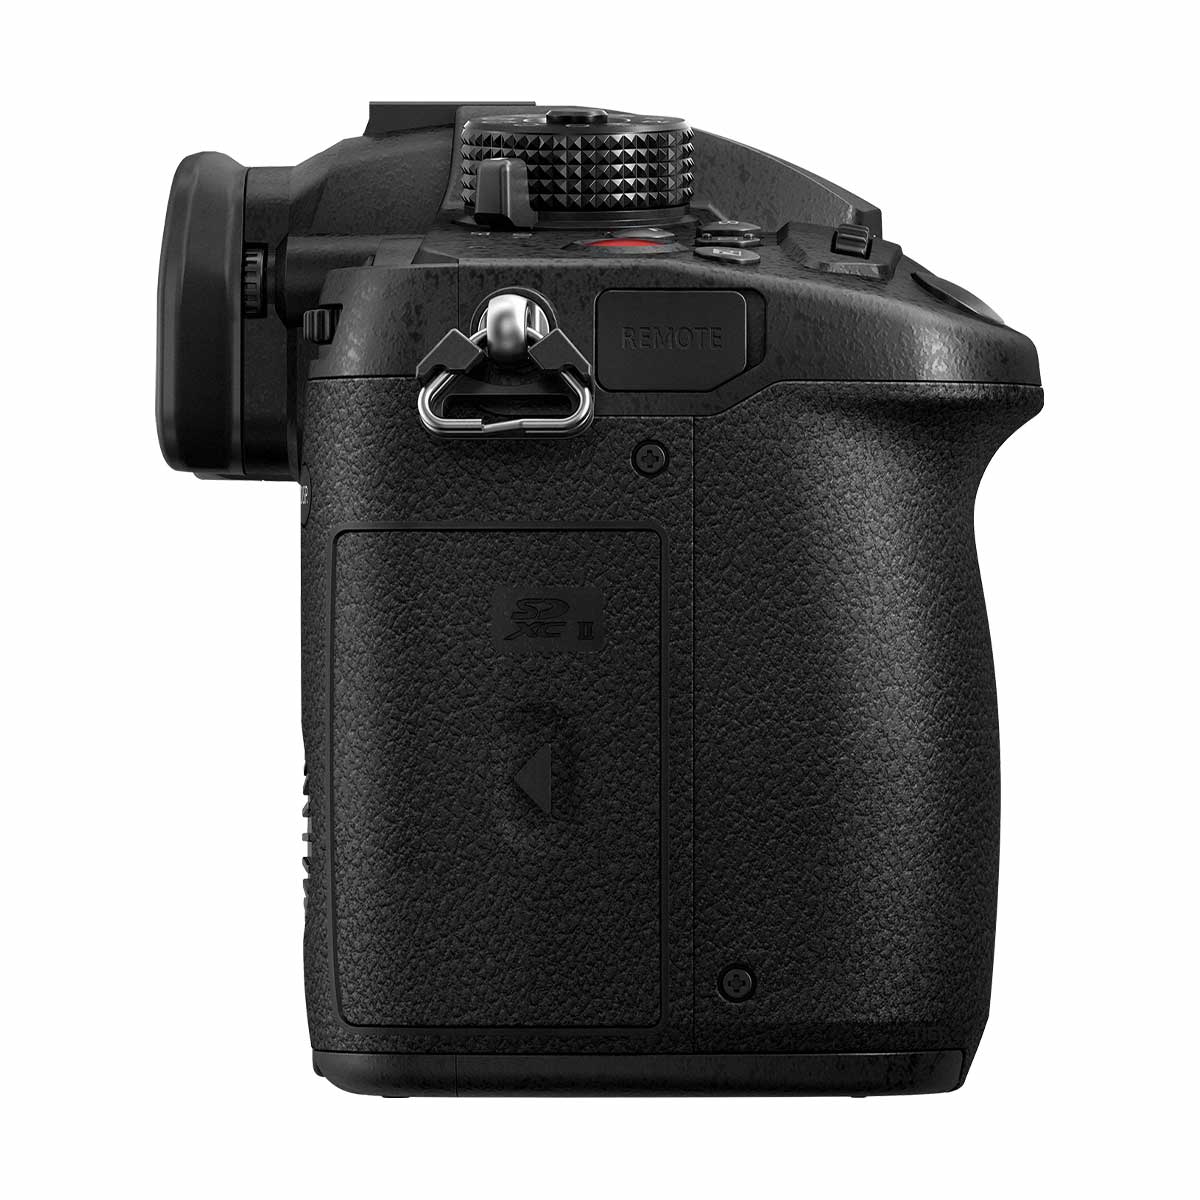 Panasonic Lumix DMC-GH5M2 Digital Camera Body